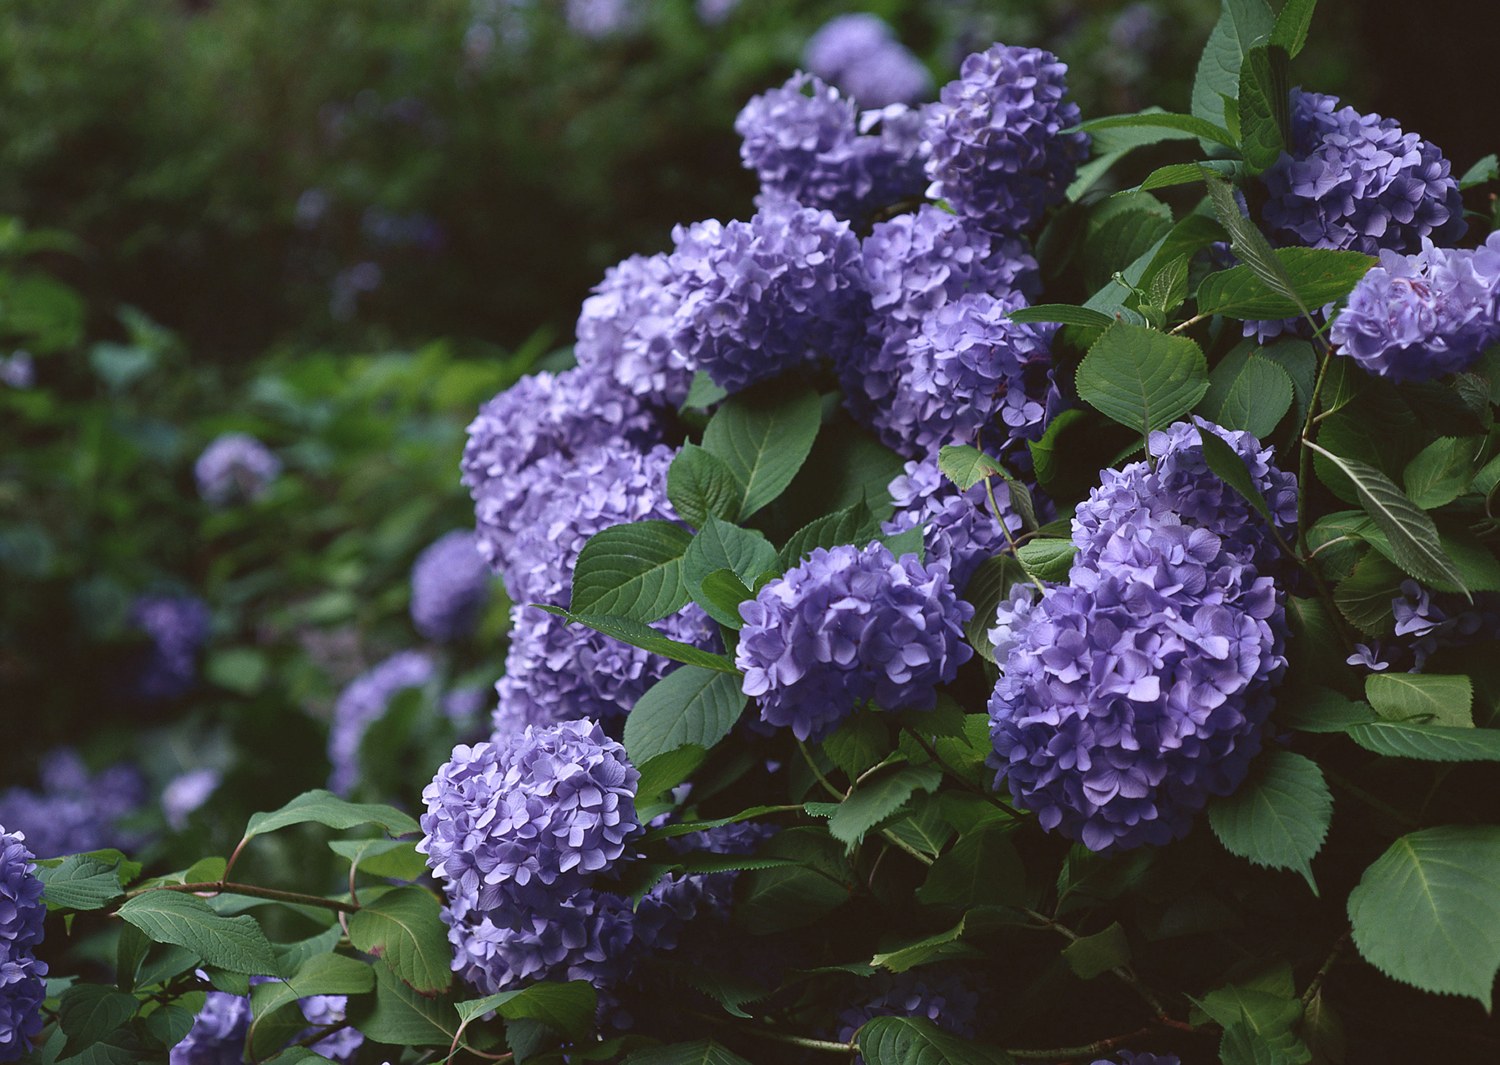 Lush purple hydrangeas